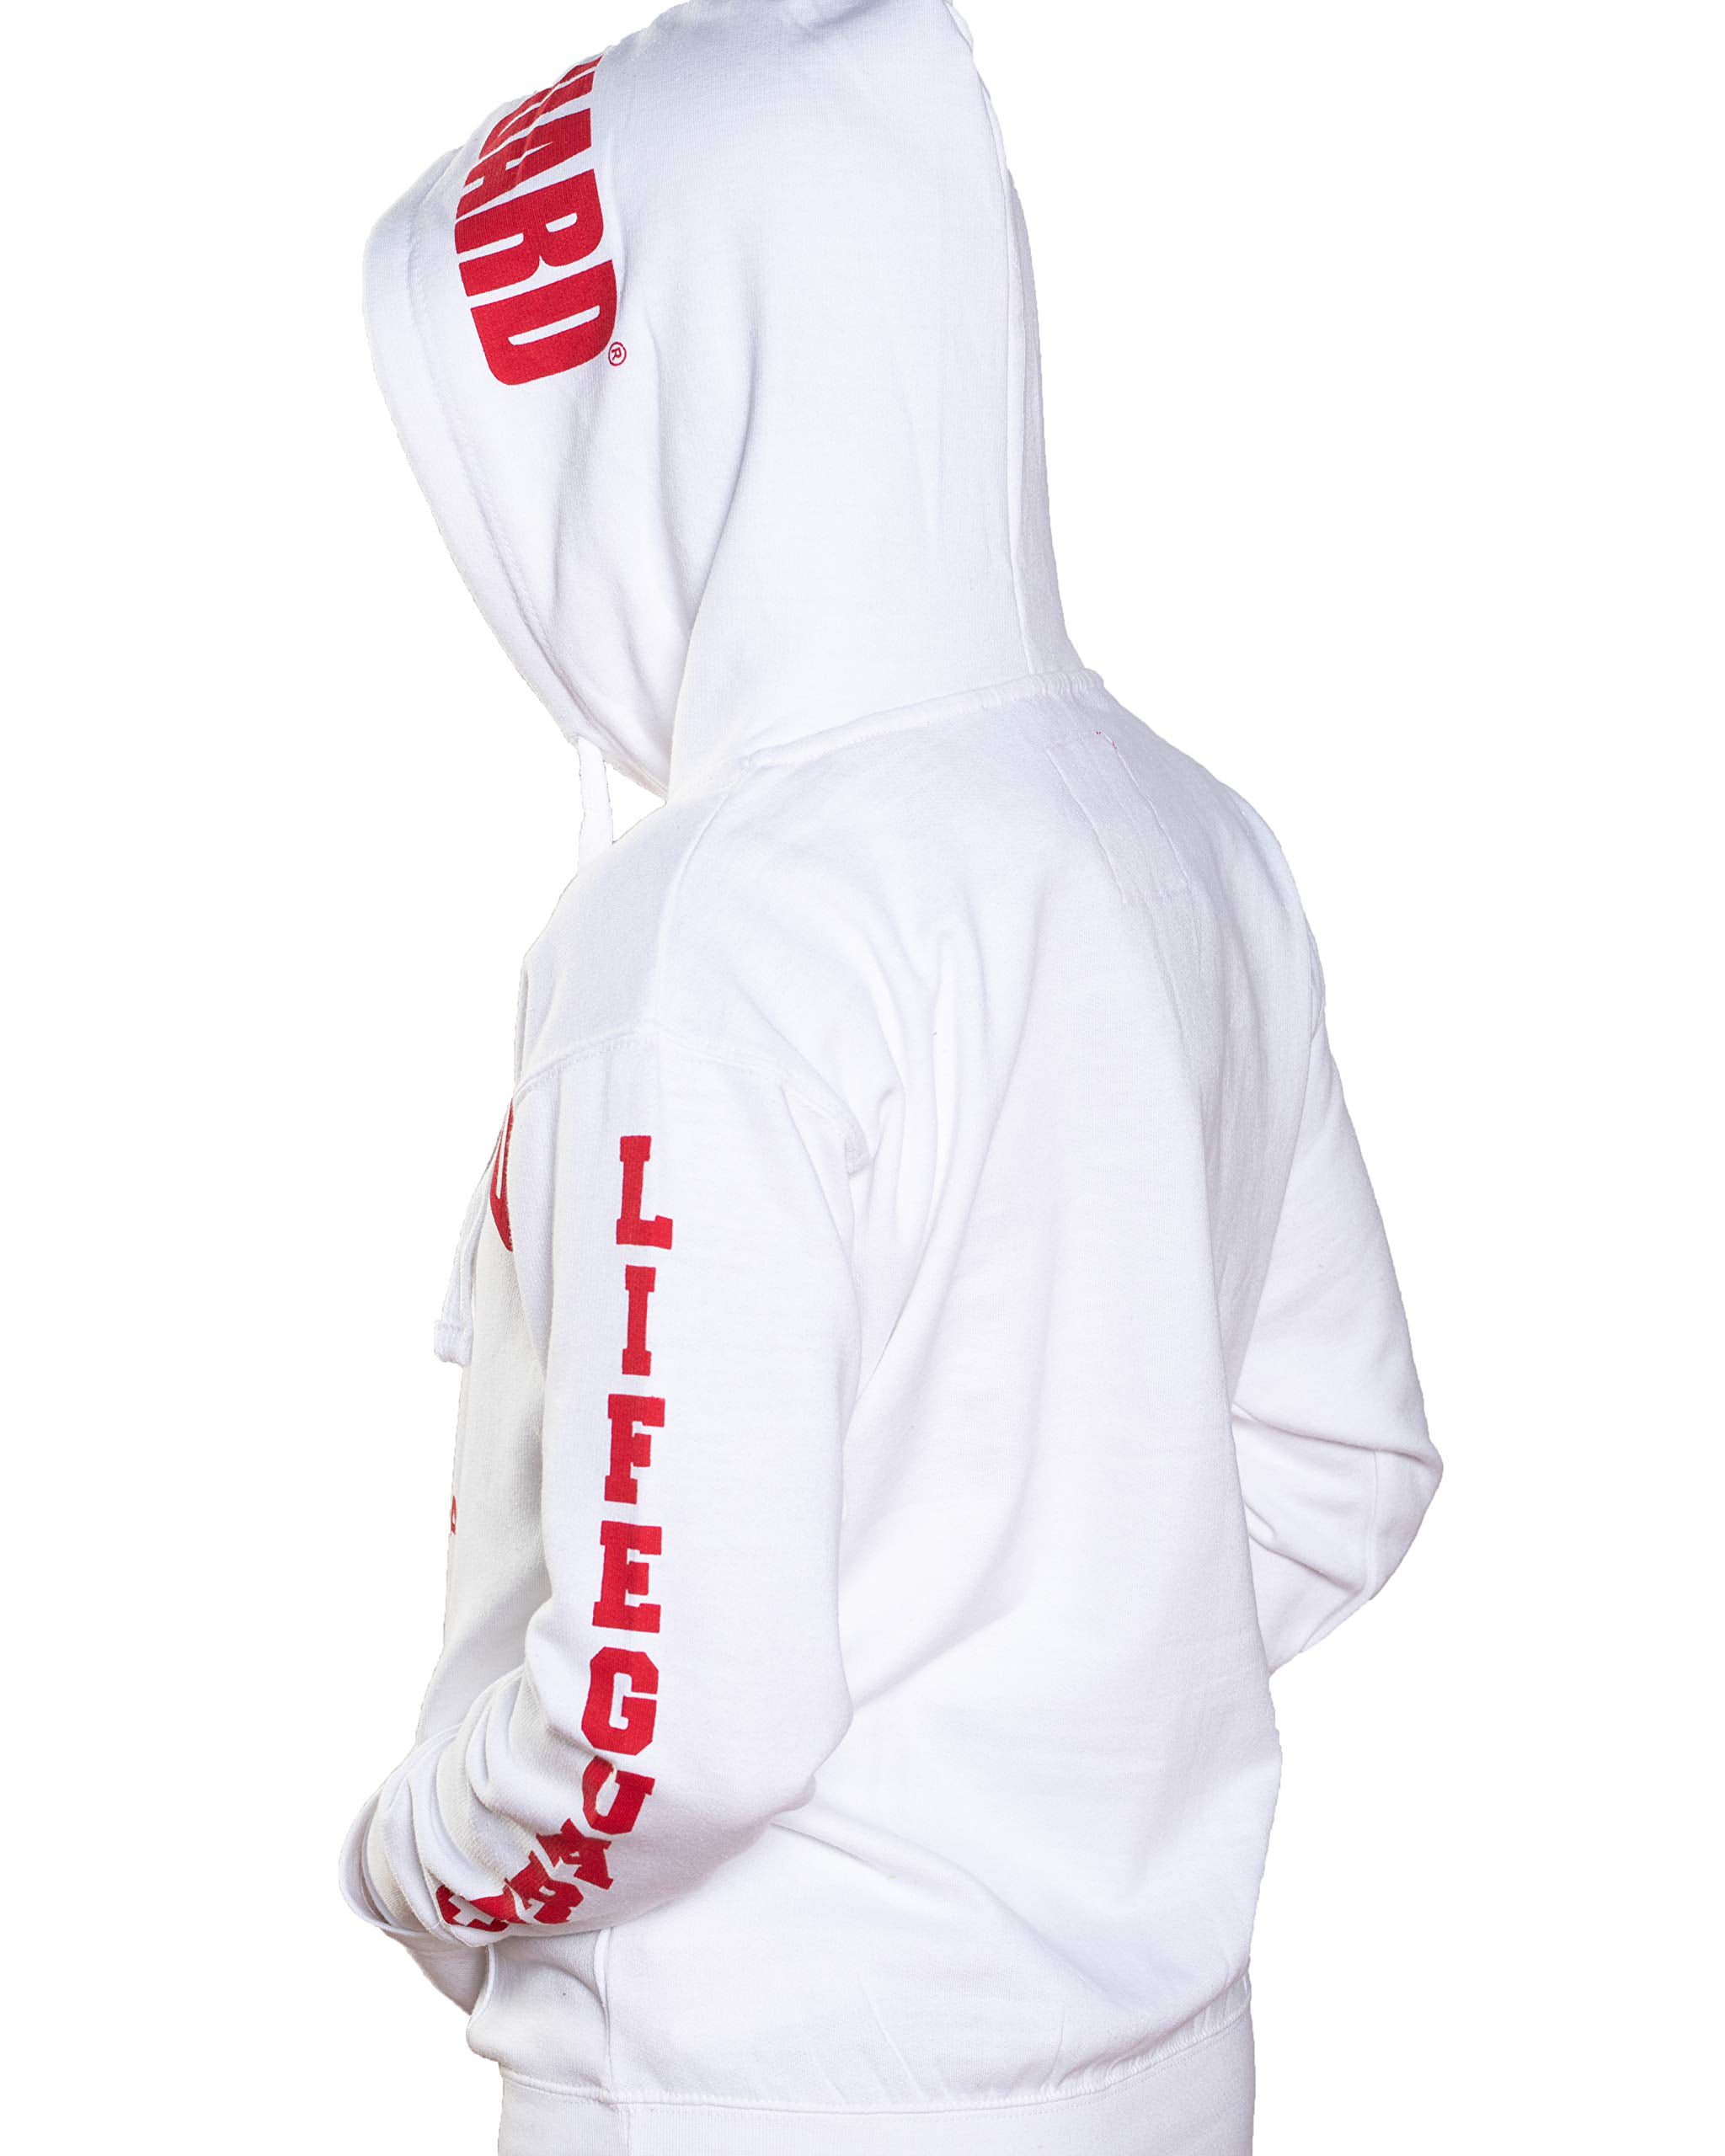 LIFEGUARD Officially Licensed Ladies California Hoodie Sweatshirt Apparel  for Women, Teens and Girls (Medium, White)